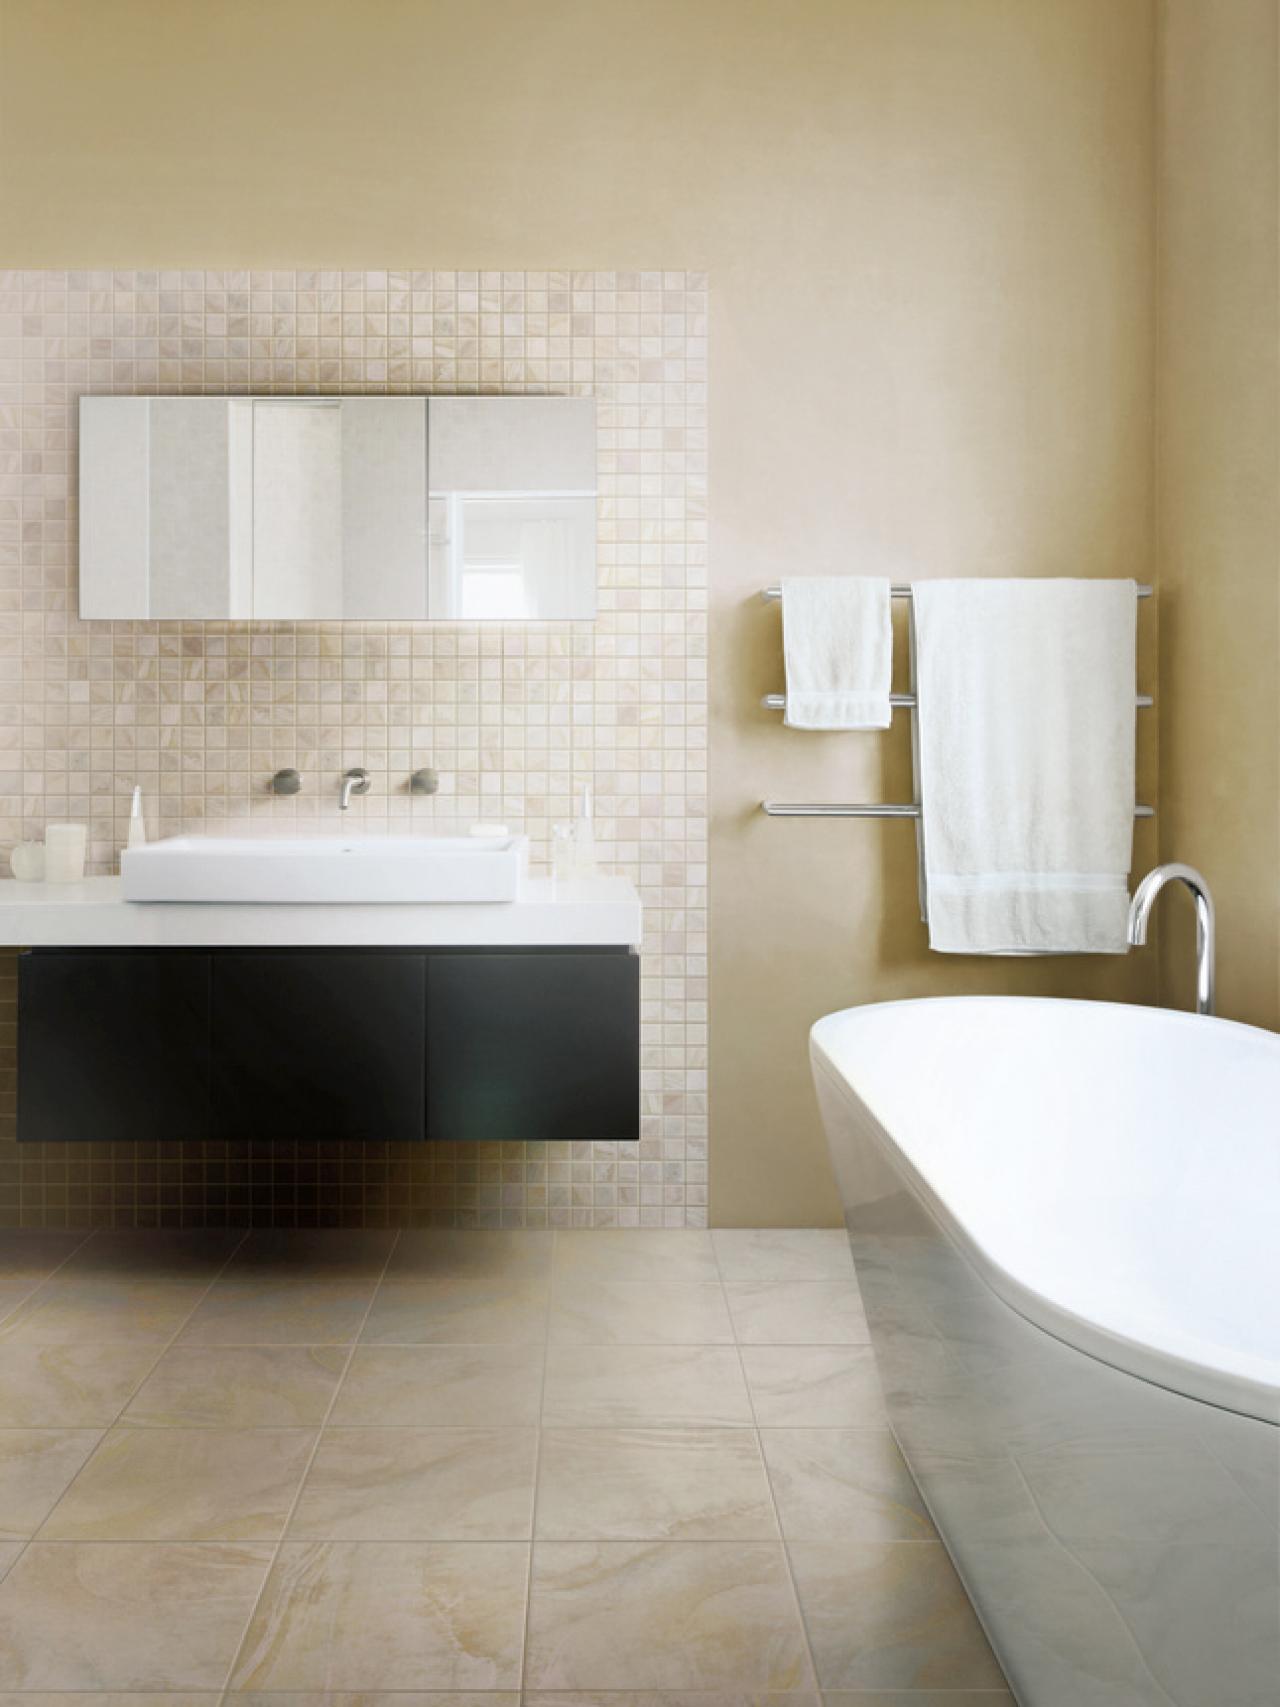 Porcelain Tile Bathroom Floor Reasons To Choose Porcelain Tile Hgtv Porcelain Tiles Are